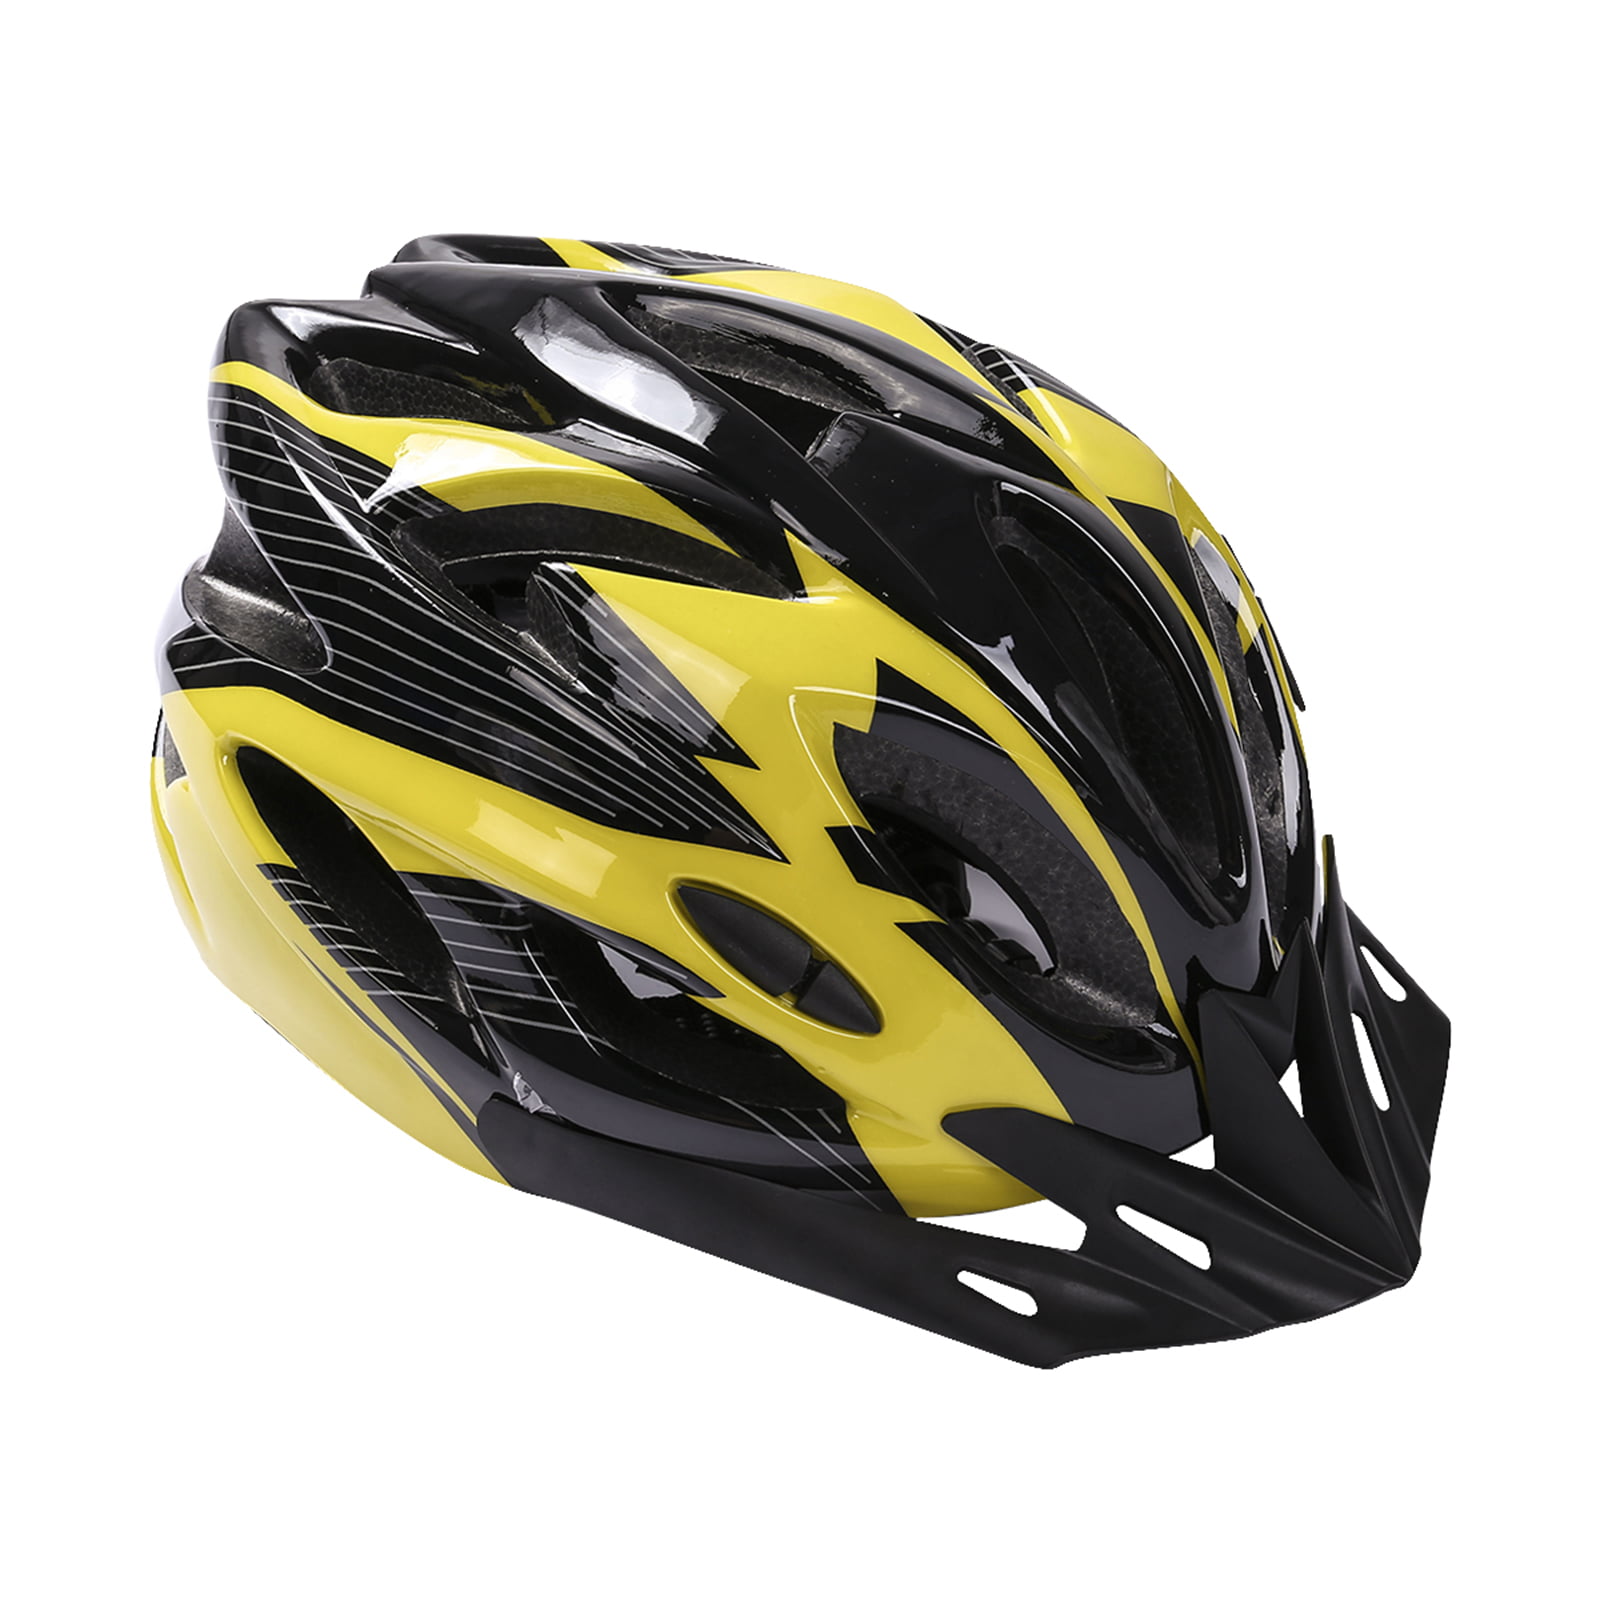 Unisex Bicycle Helmet Cycling Men Women Safety Helmet Visor Bikes Accessories 